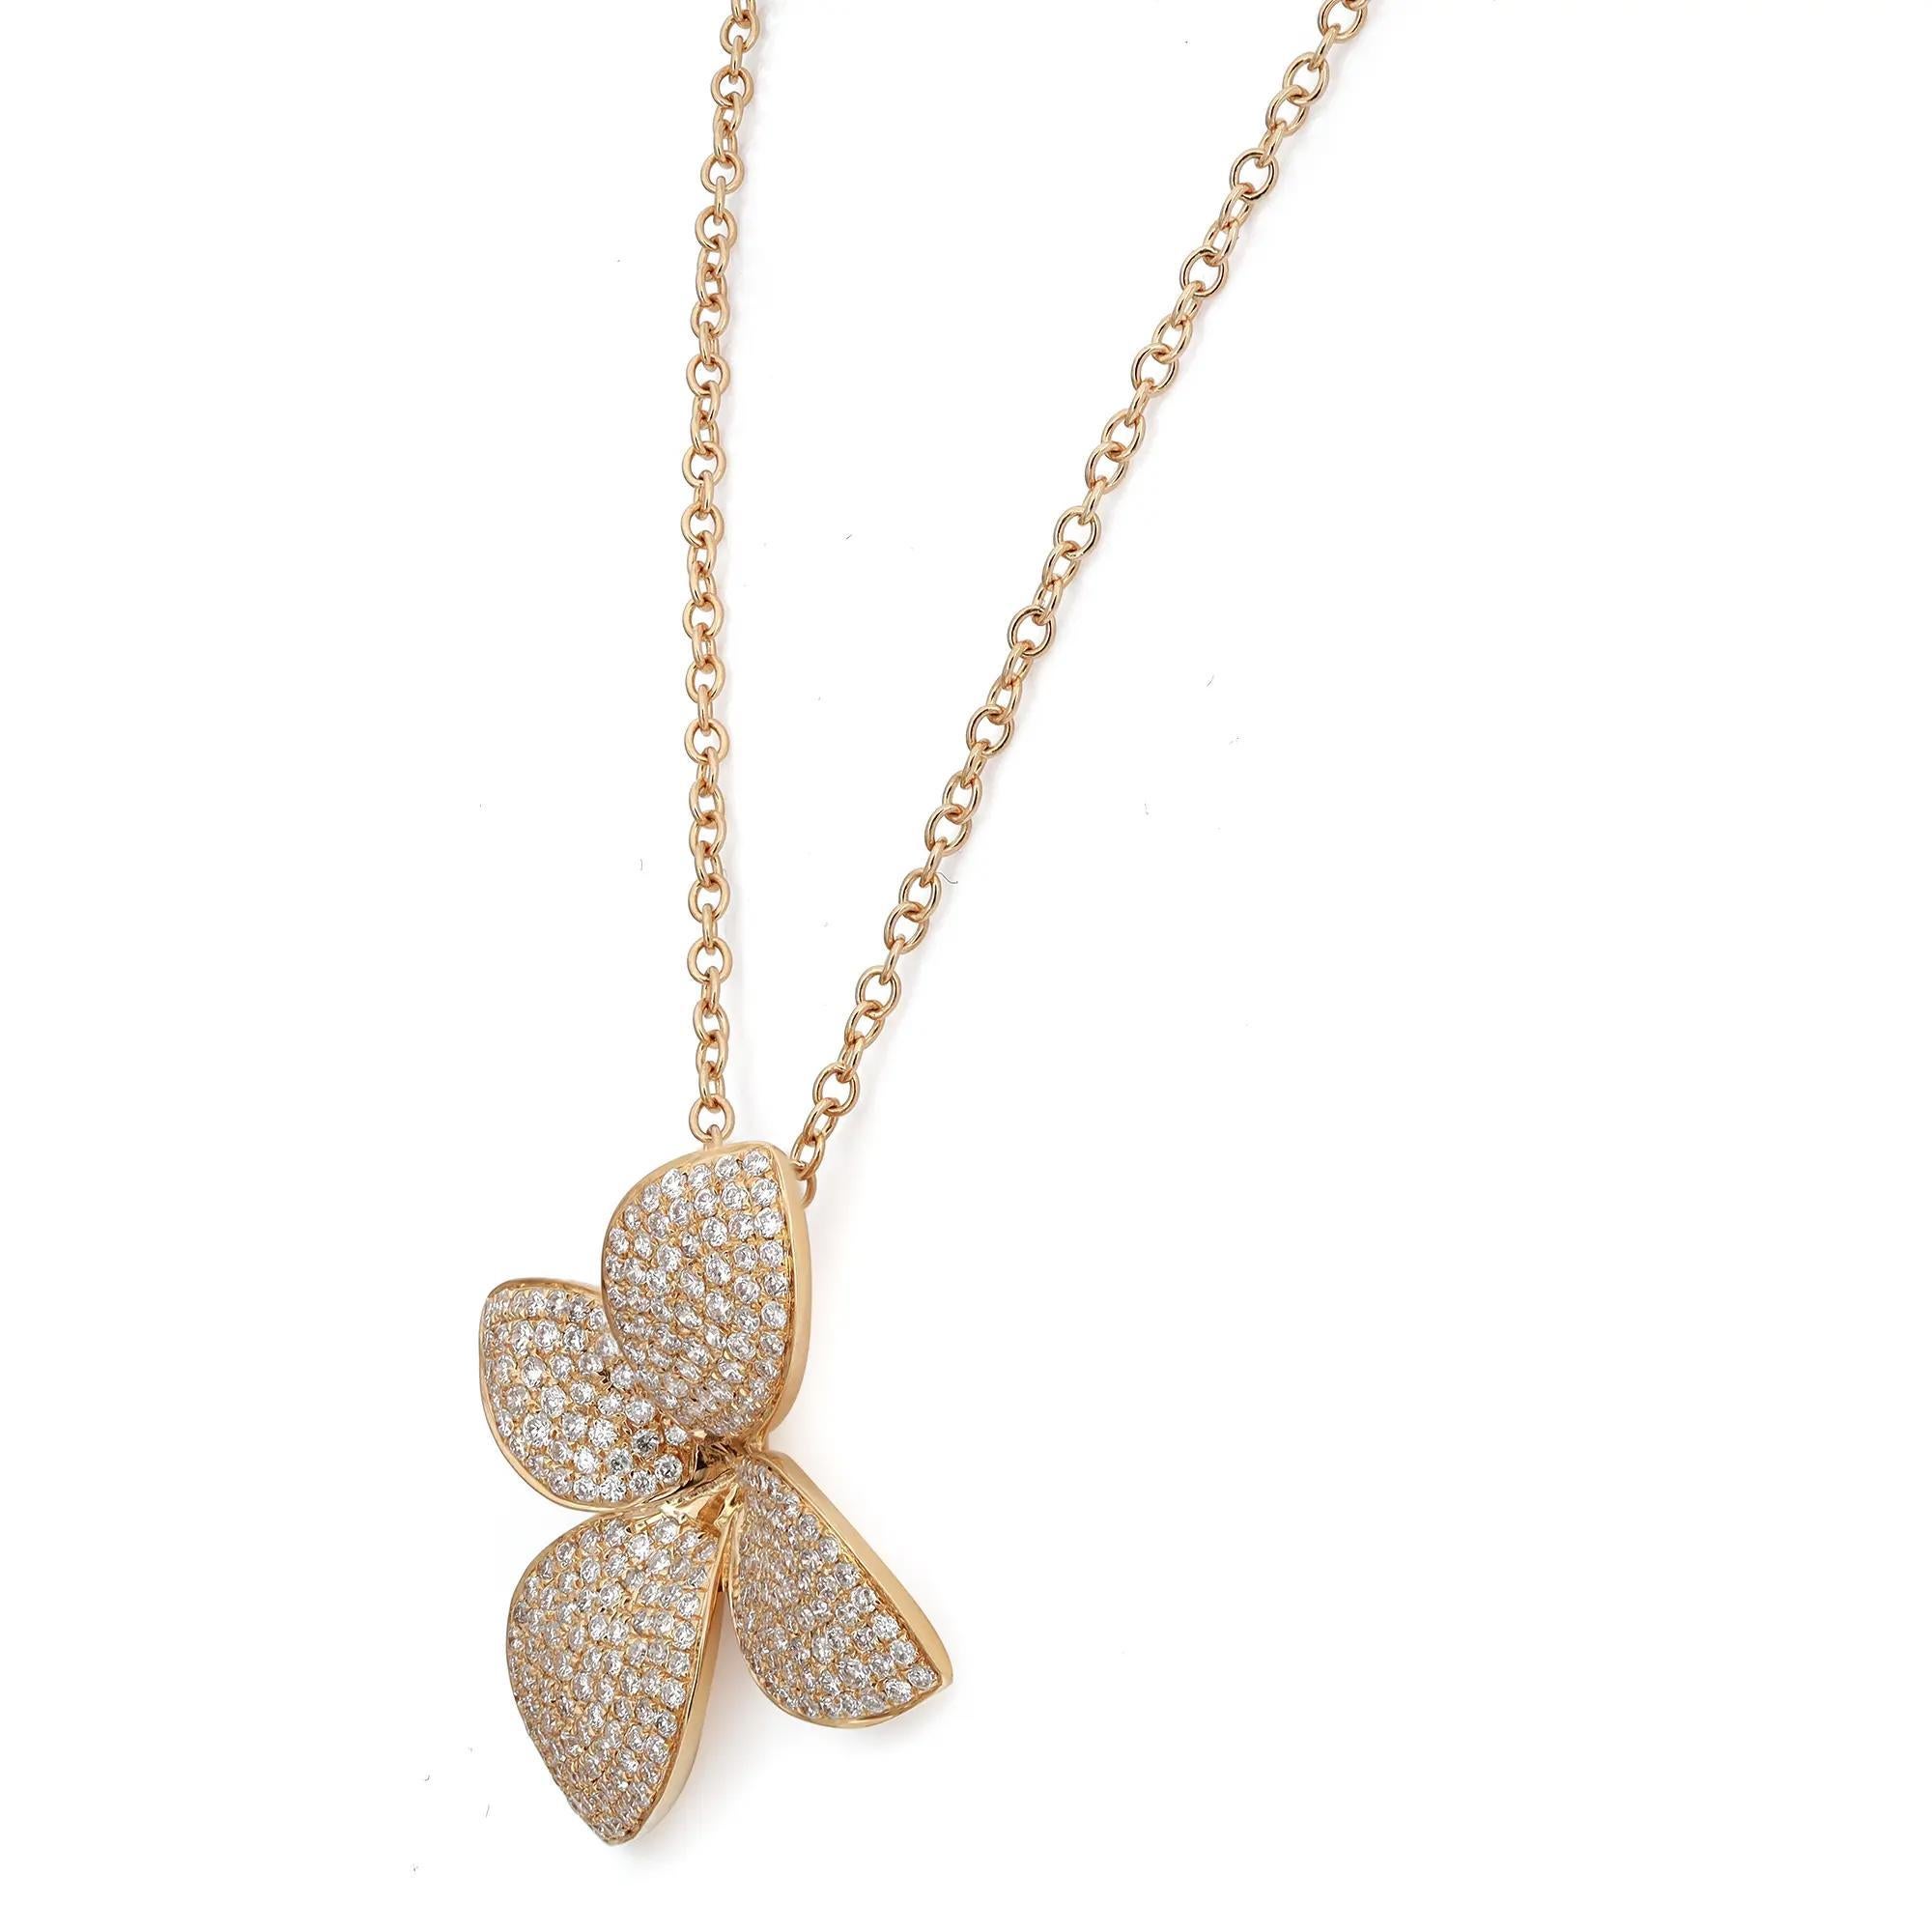 Modern Pave Set Round Cut Diamond Flower Pendant Necklace 18K Yellow Gold 1.07Cttw For Sale